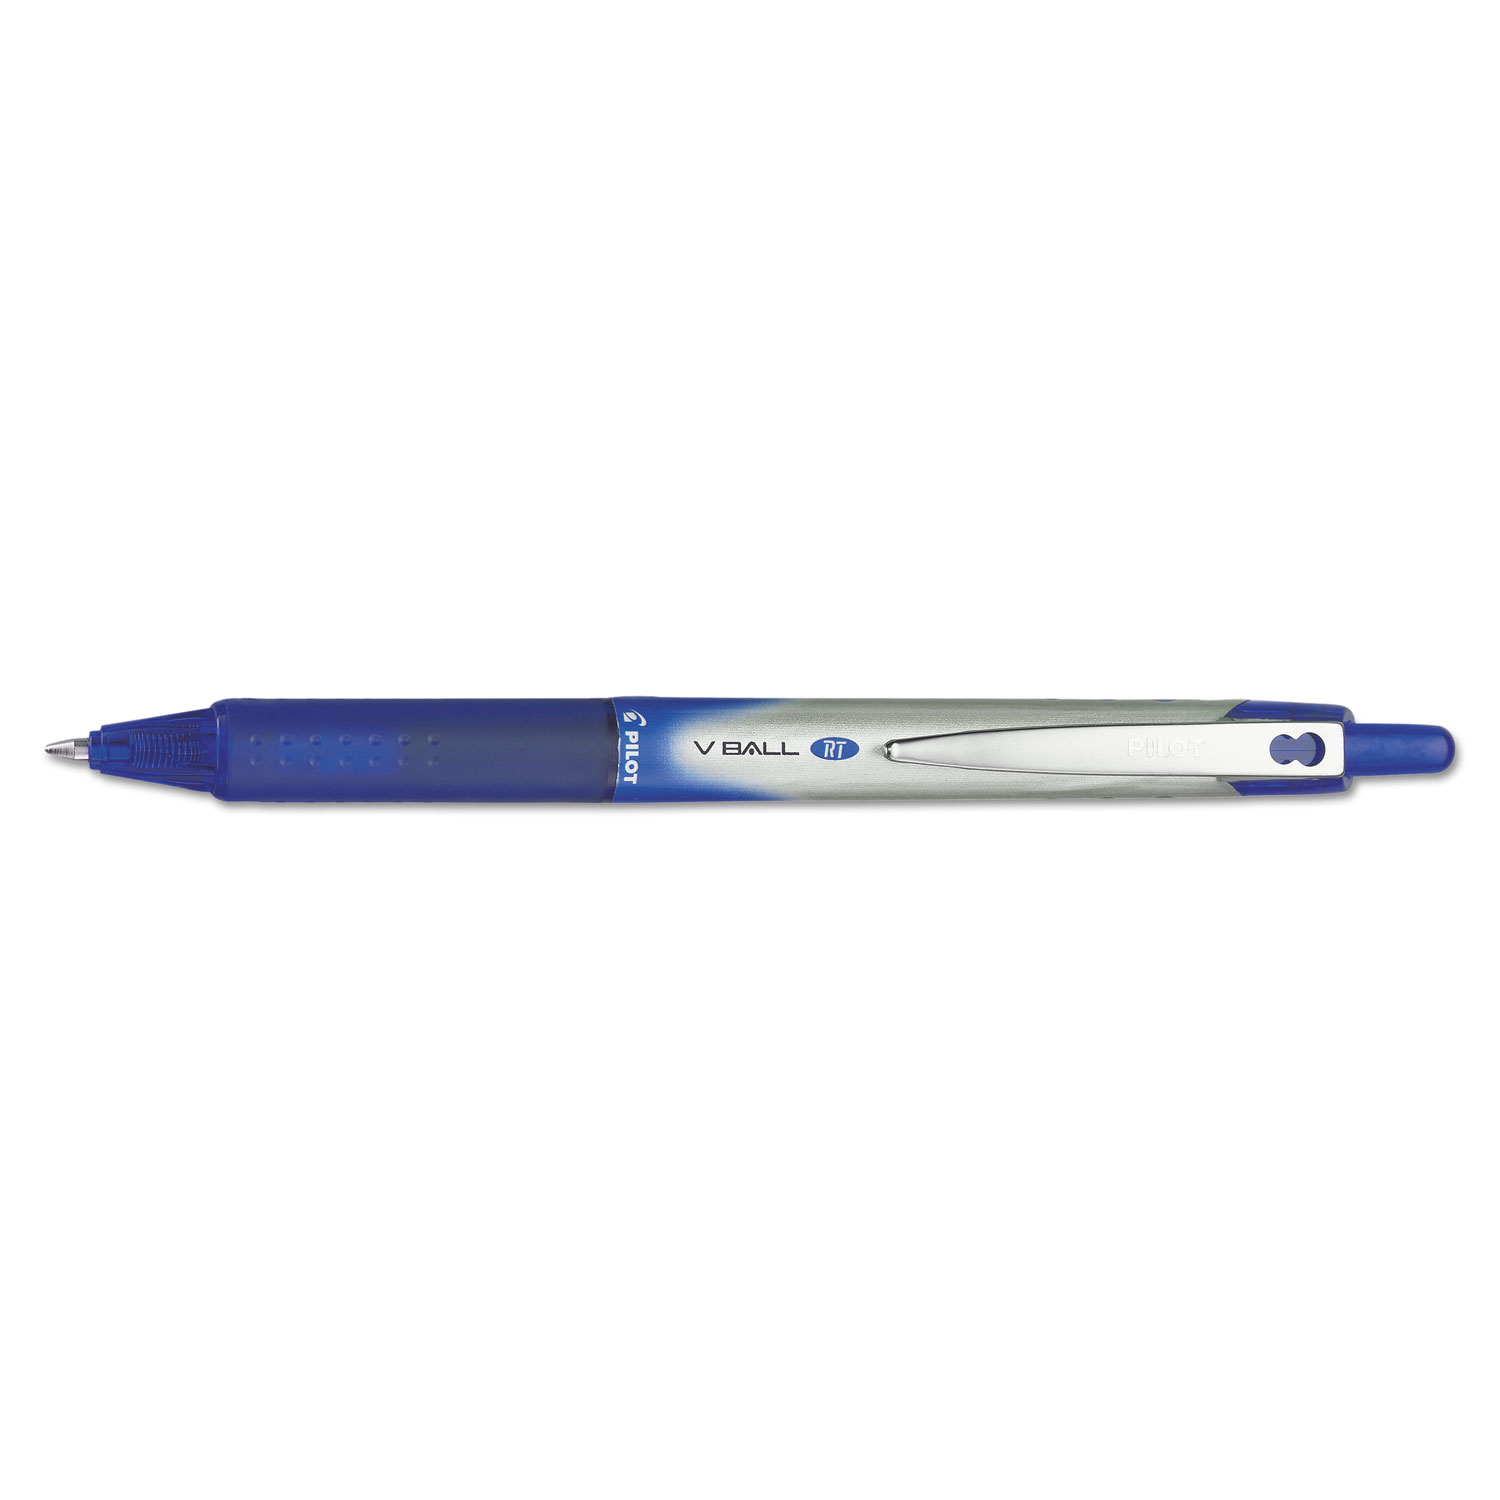 VBall RT Liquid Ink Retractable Roller Ball Pen, 0.7mm, Blue Ink, Blue/White Barrel